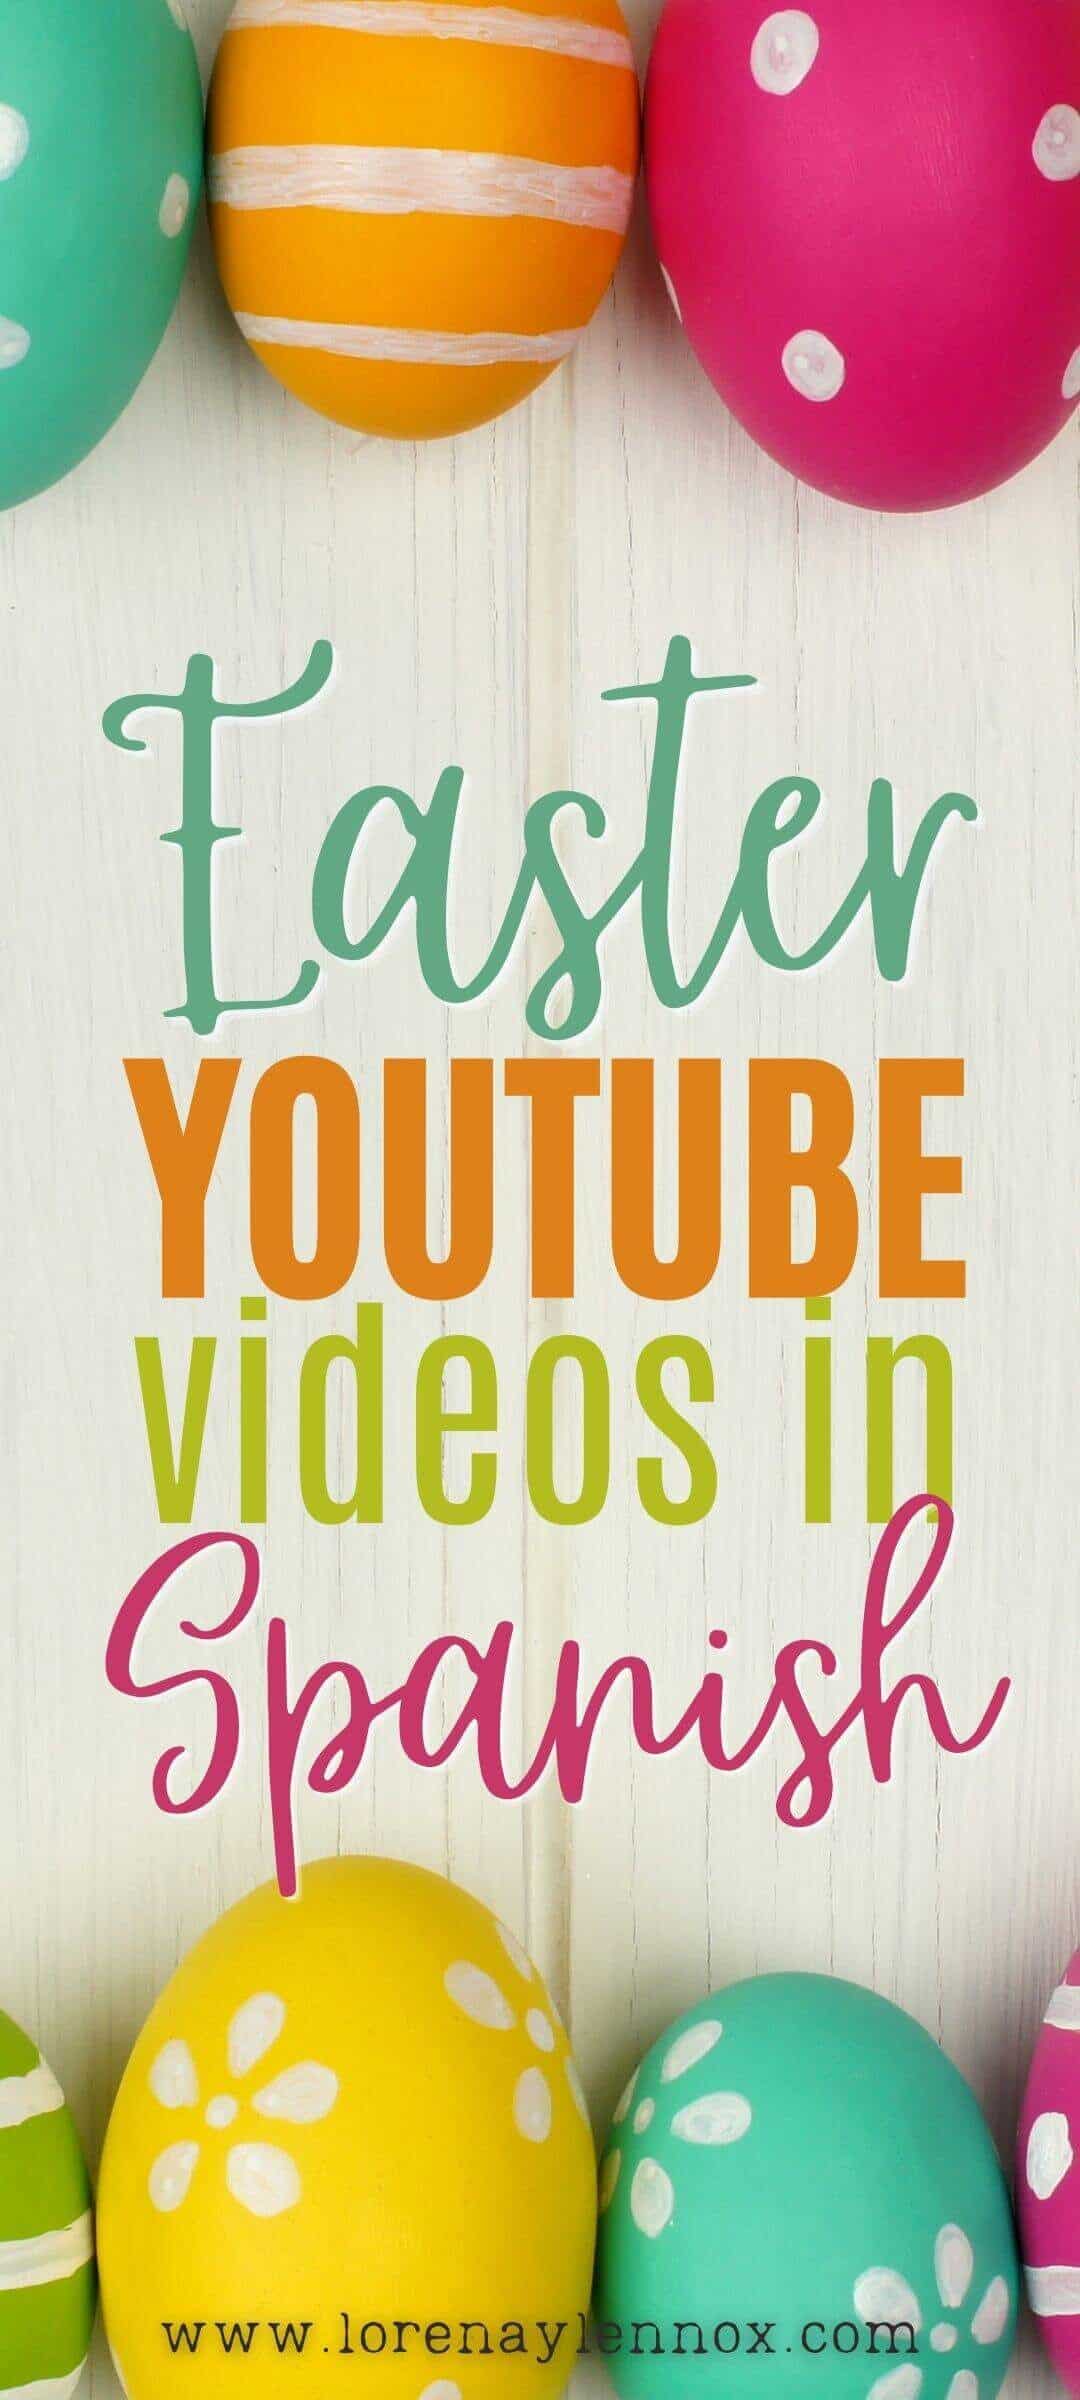 12 Easter YouTube Videos in Spanish Your Children Will Love #Spanishlearning #Spanishforkids #spanishforchildren #Pascuaparaniños #pascua #easteractivities #easteractivitiesinspanish